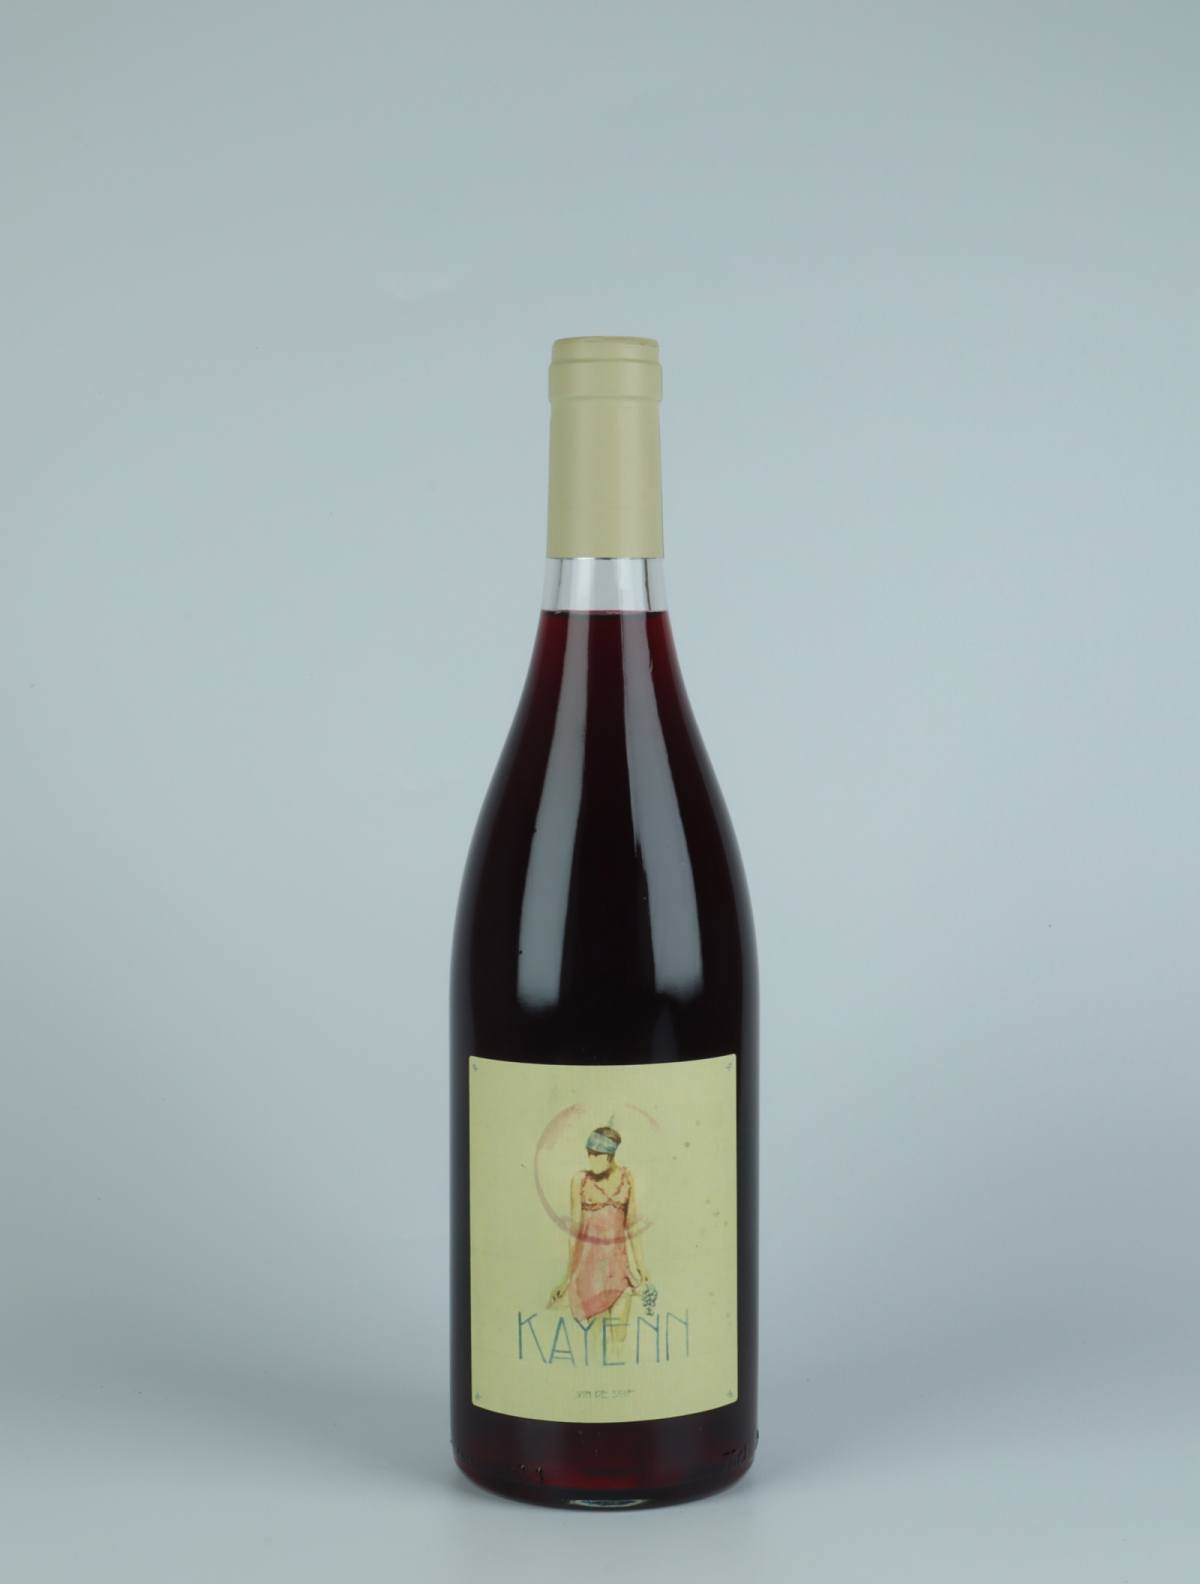 A bottle 2021 Kayenn Red wine from Domaine Bobinet, Loire in France